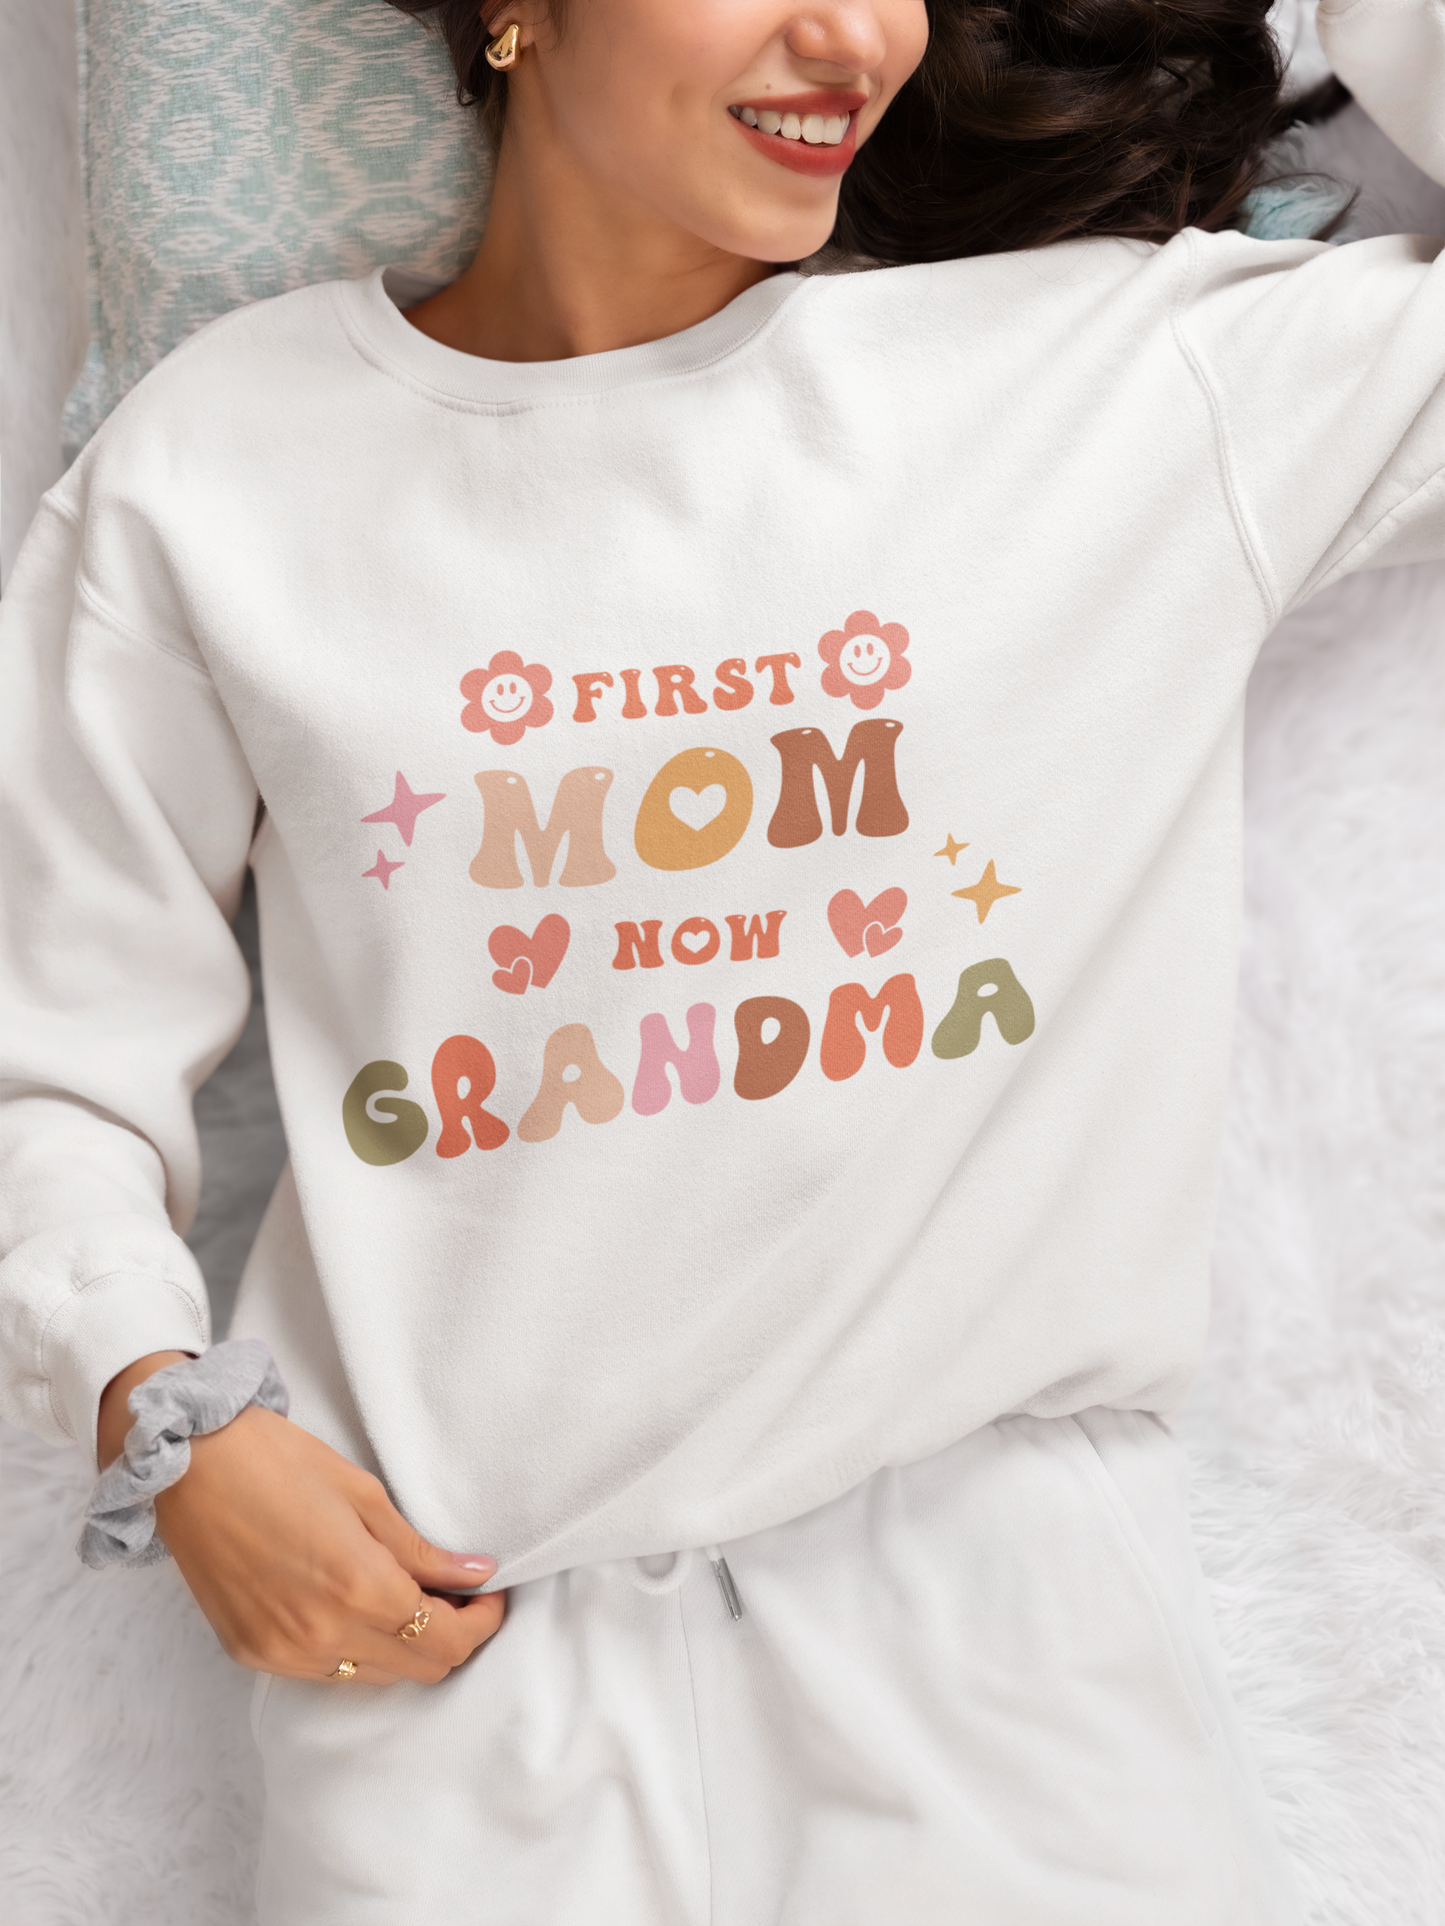 First Mom Now Grandma Shirt, New Grandma Shirt, Mom And Grandma Shirt, Mothers Day gift